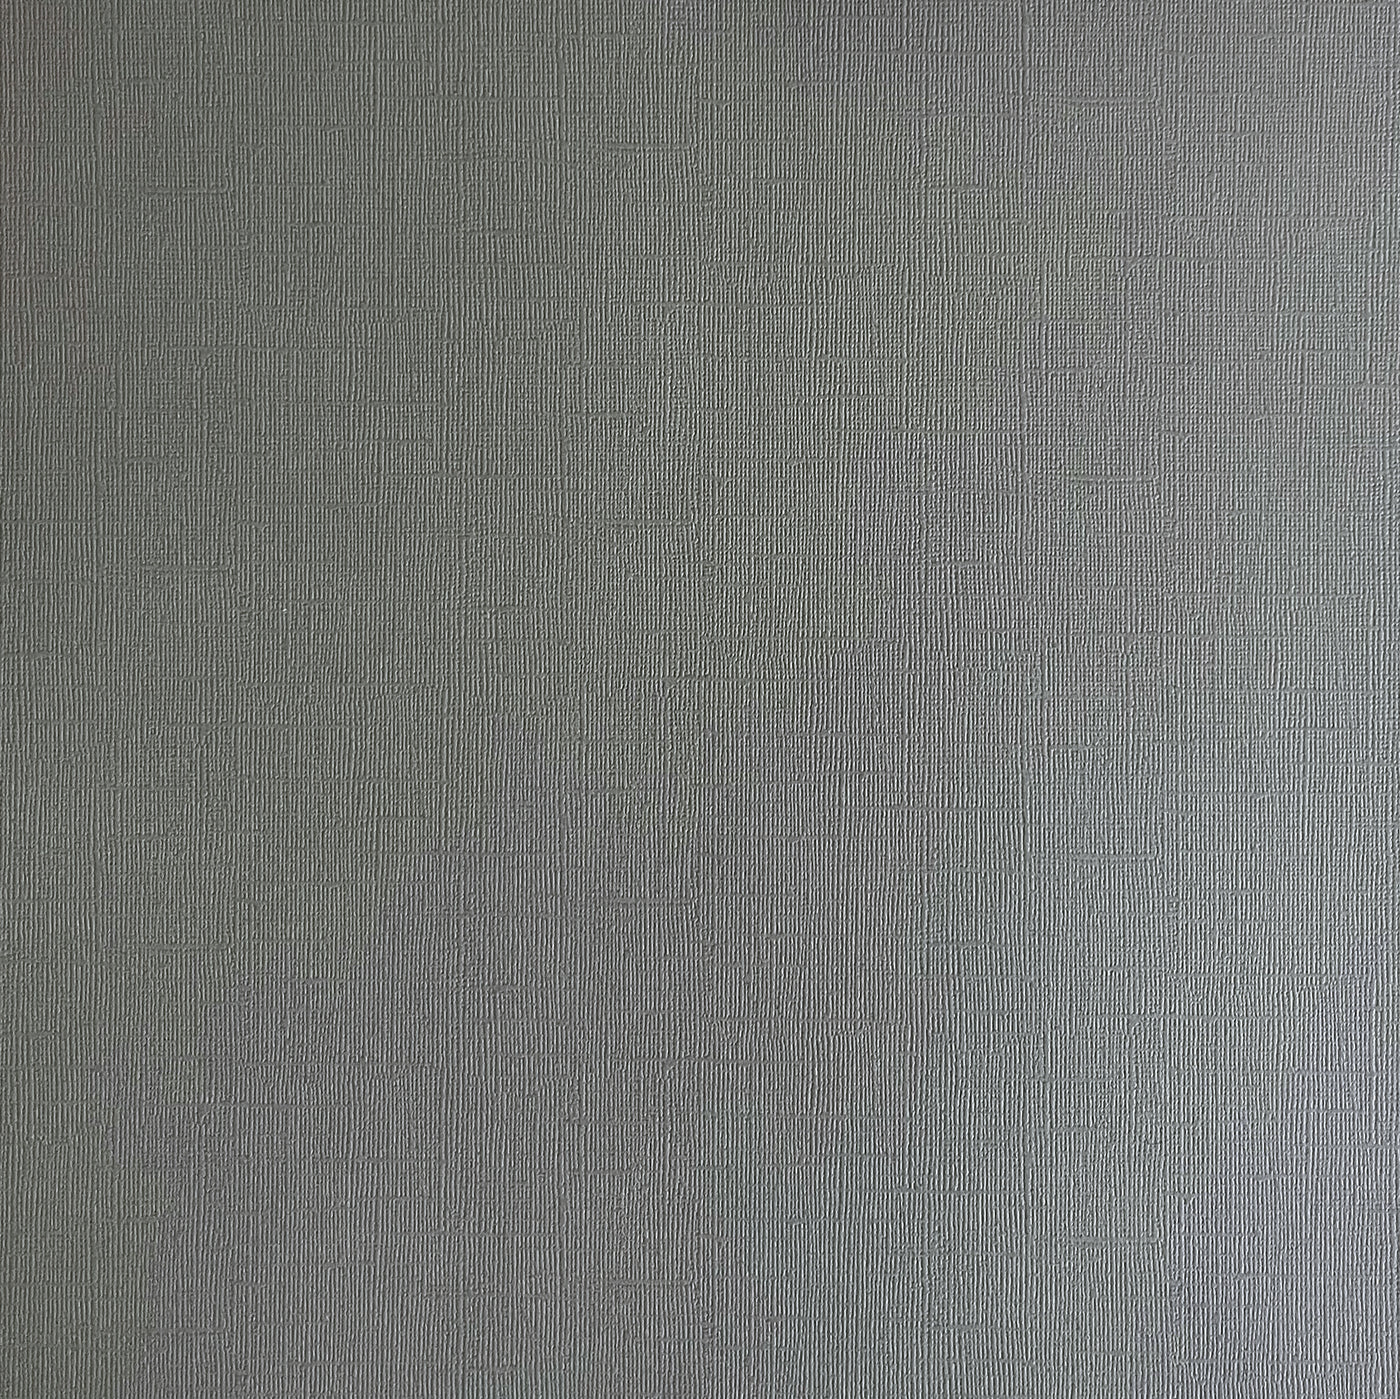 Encore Tin Man - Medium Gray Textured Cardstock for Cricut cutting